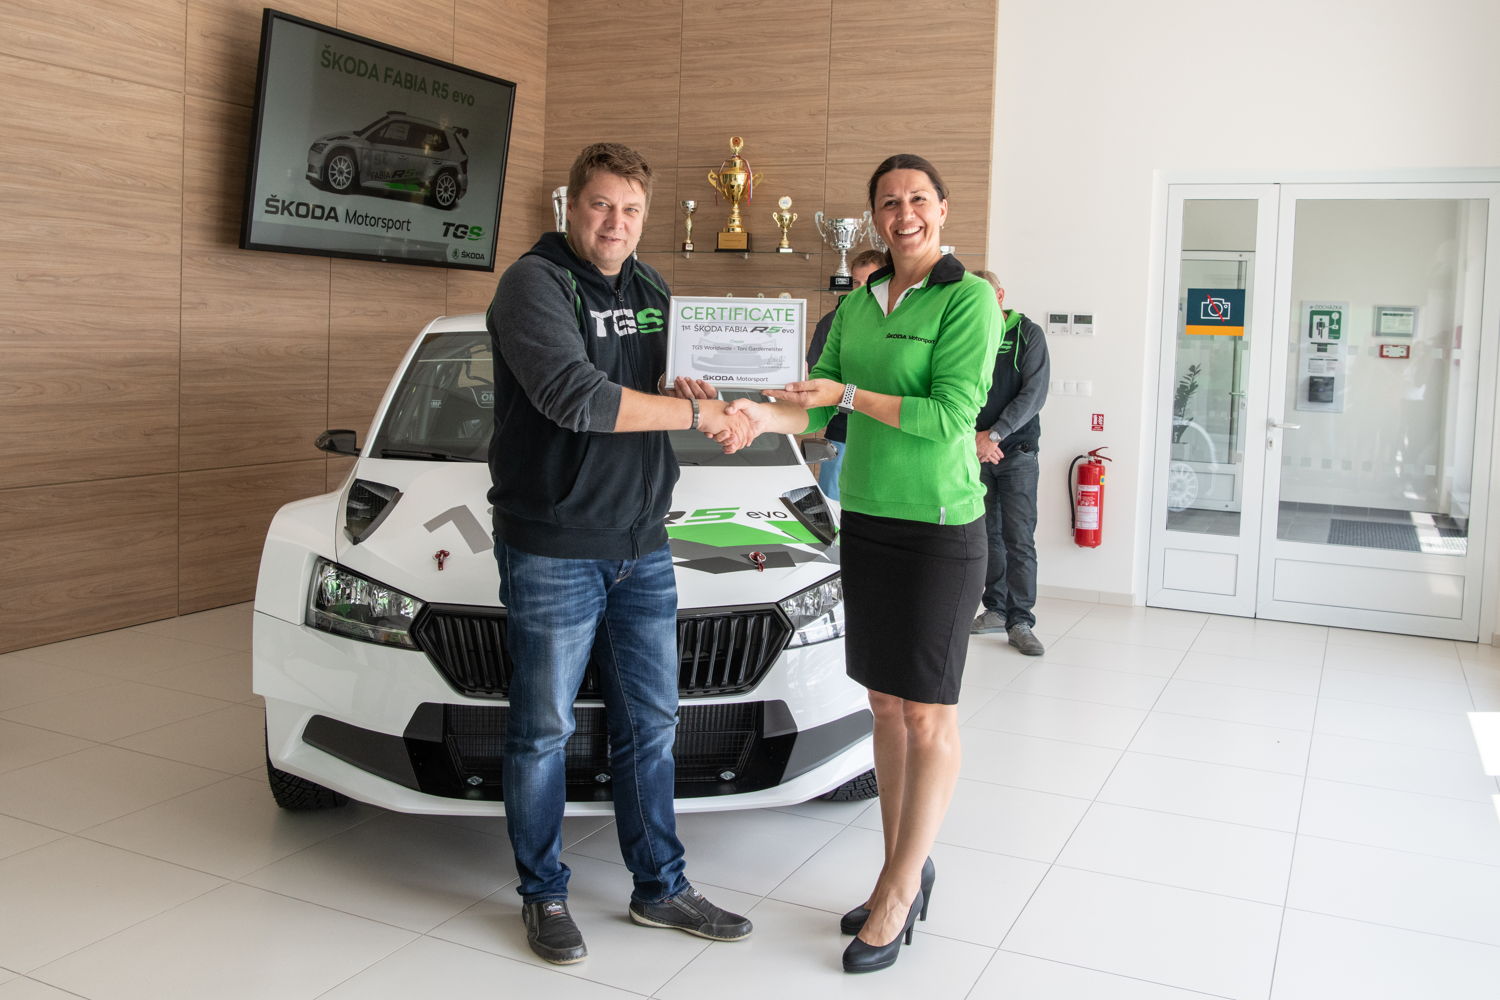 Šárka Králová (responsible for customer program at
ŠKODA Motorsport) handed the ŠKODA FABIA R5 evo
to Toni Gardemeister, owner of TGS Worldwide